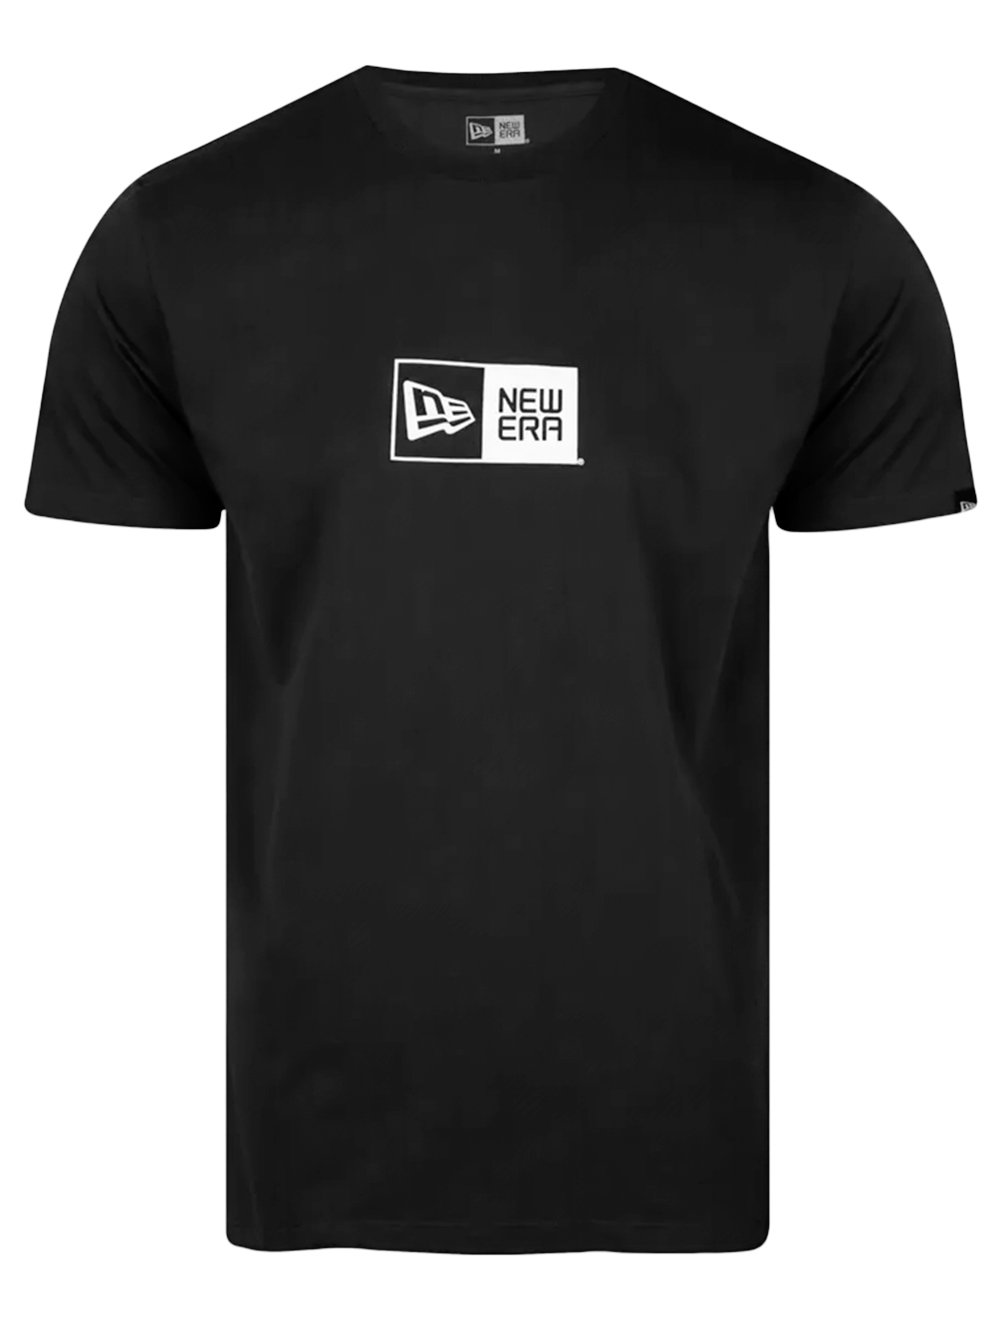 Camiseta New Era Masculina Essentials Box Logo Preta